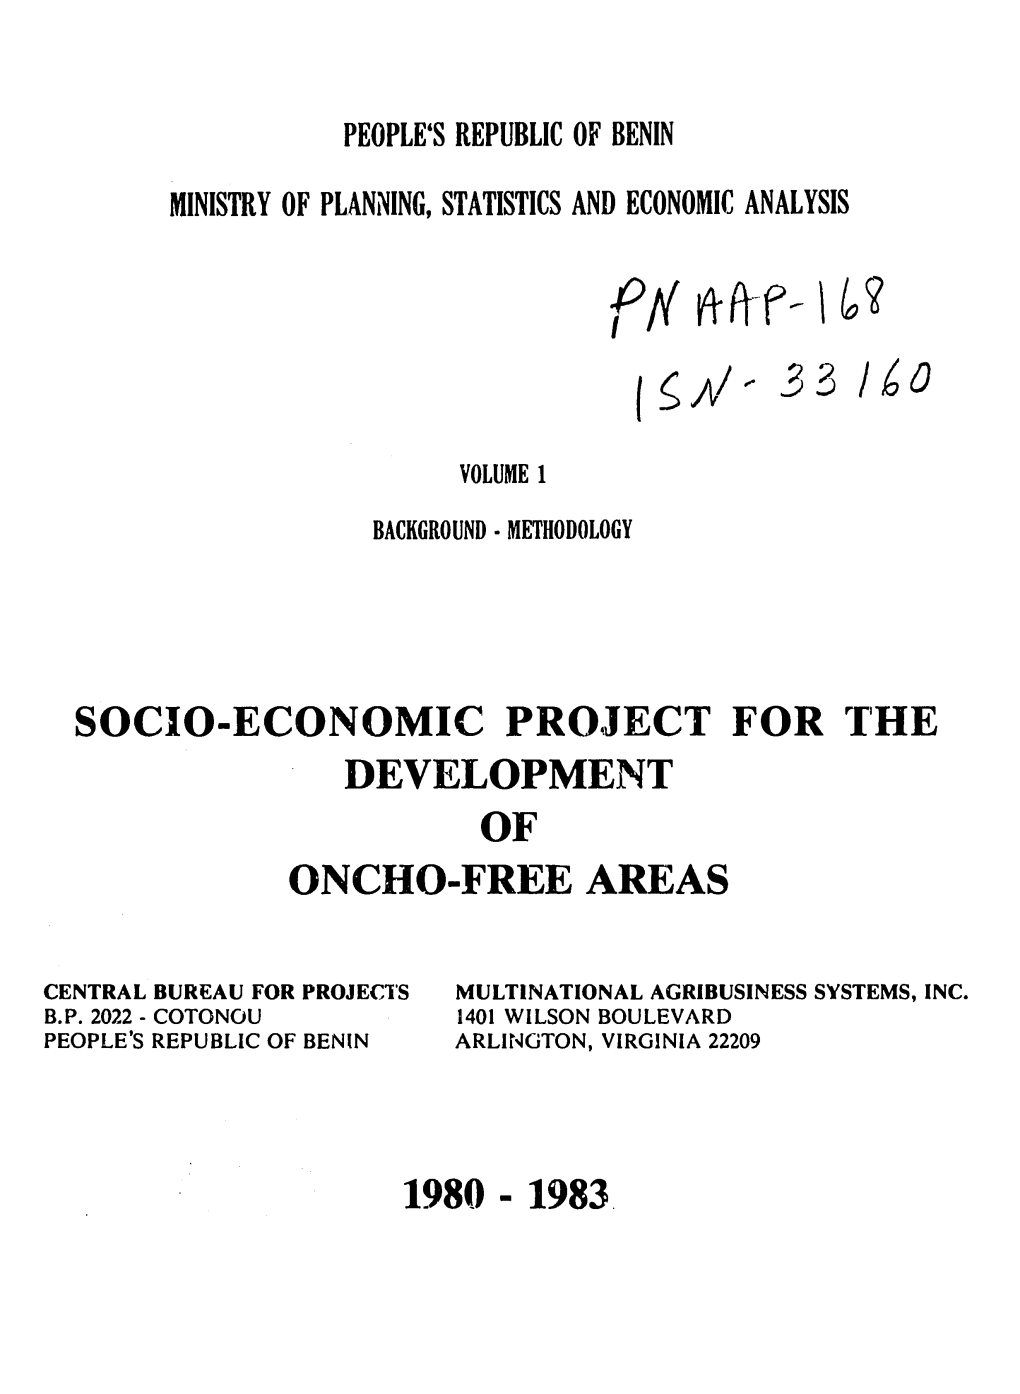 Socio-Economic Project for the Development Oncho